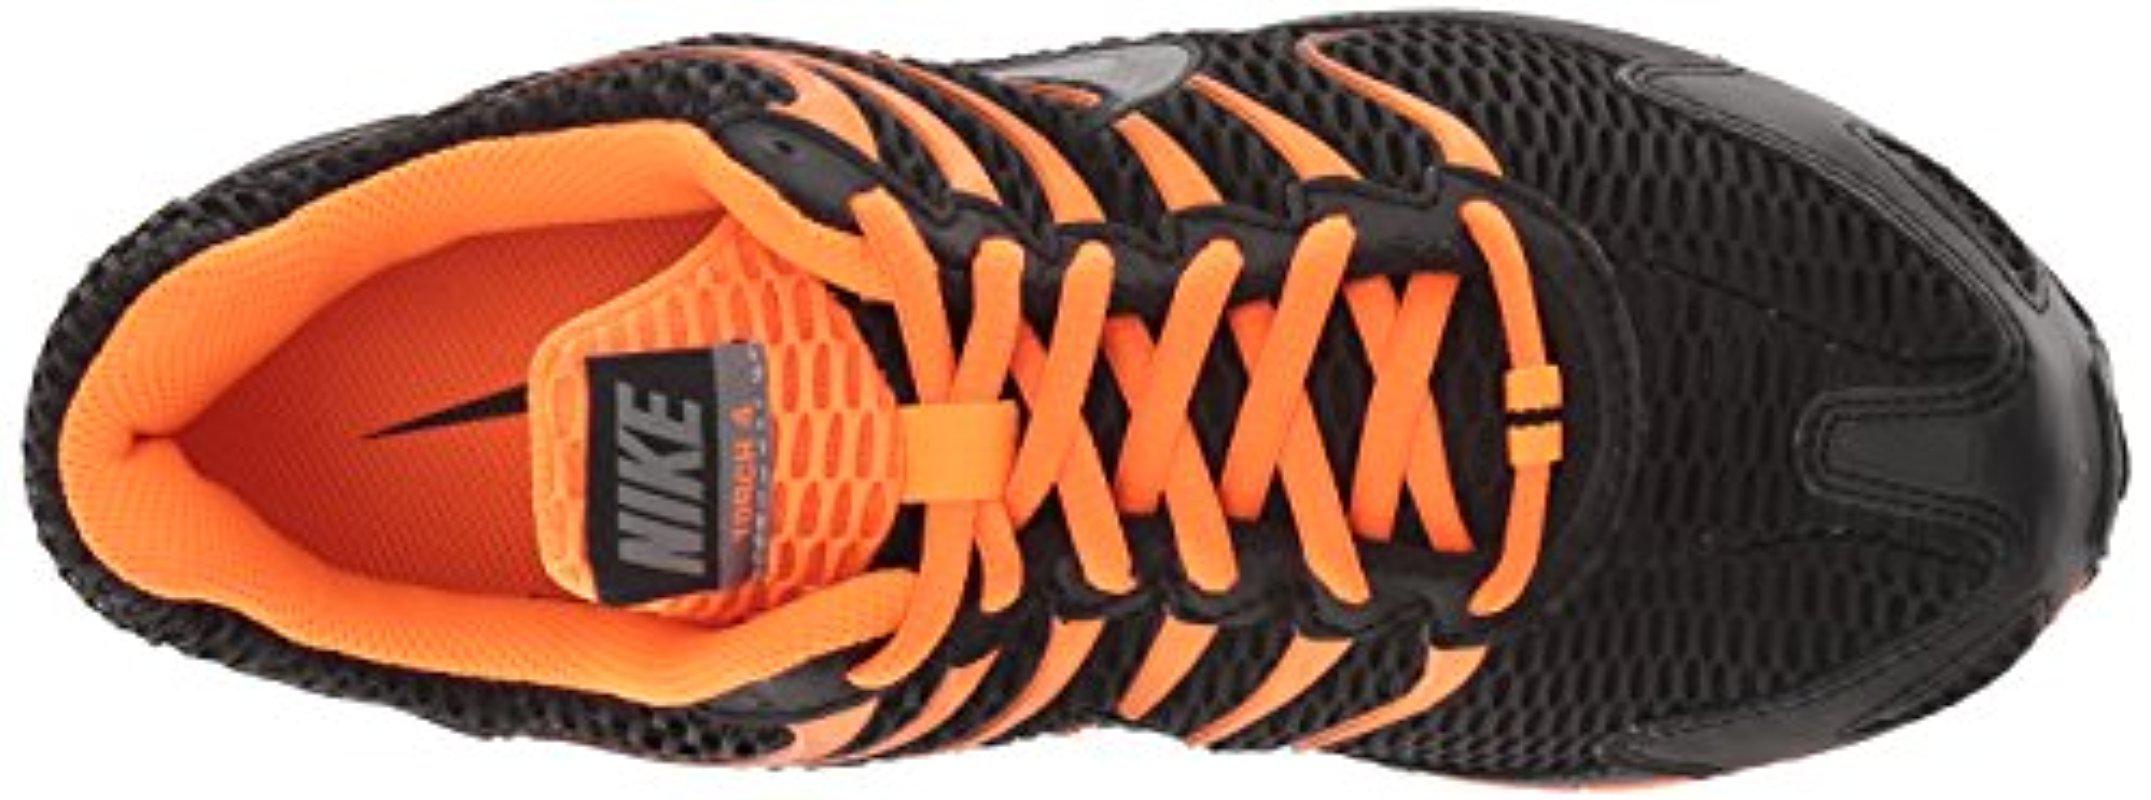 Nike Air Max Torch 4 in Orange for Men